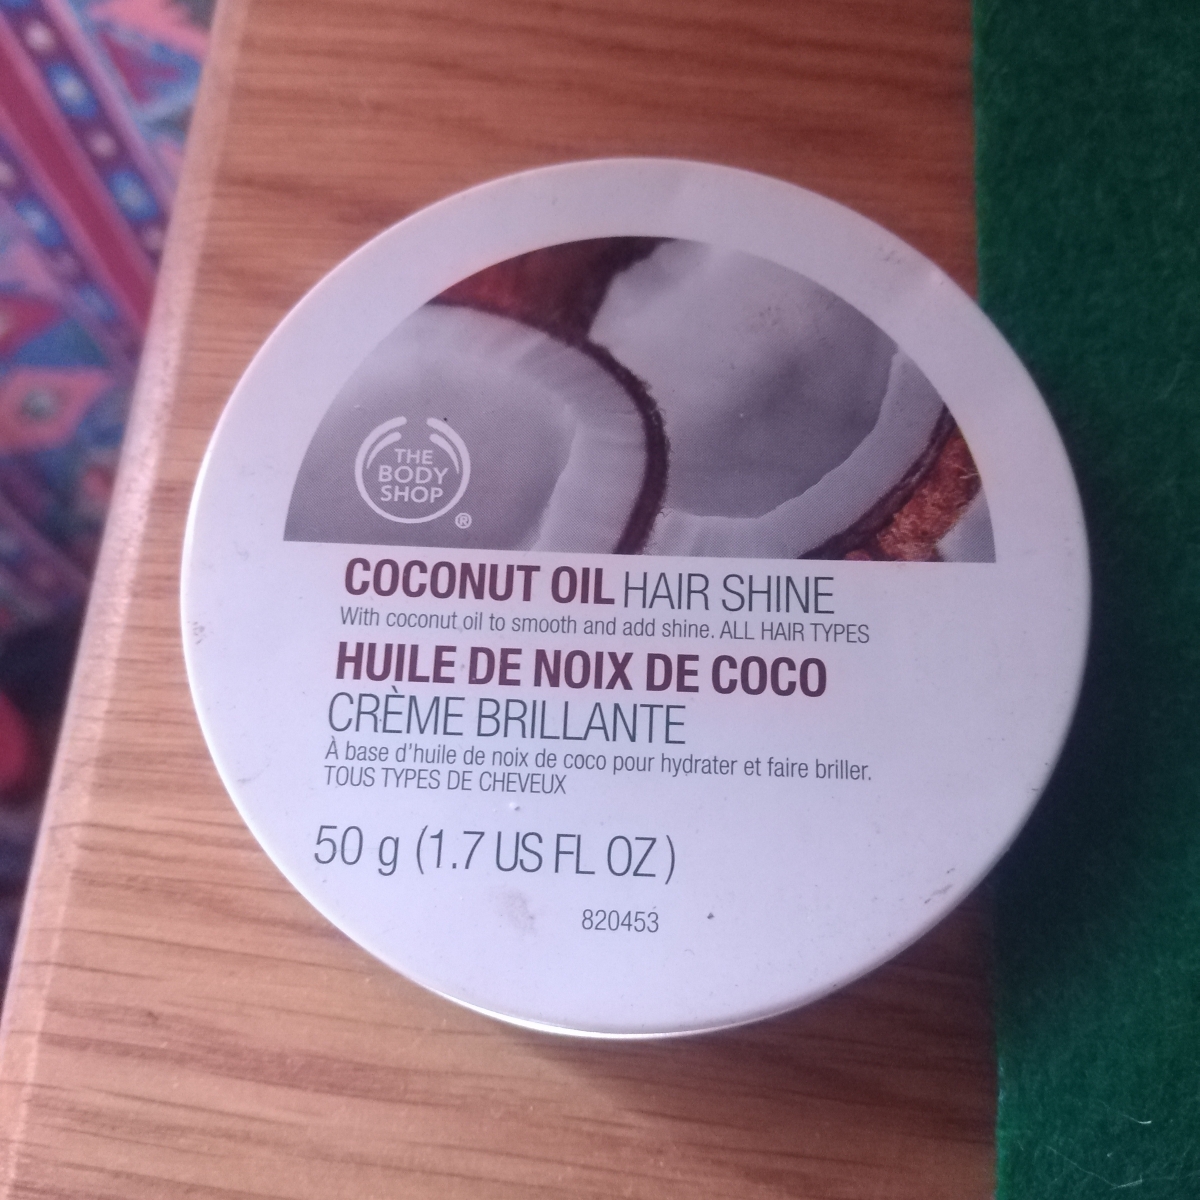 The Body Shop Coconut Oil Hair Shine Reviews | abillion